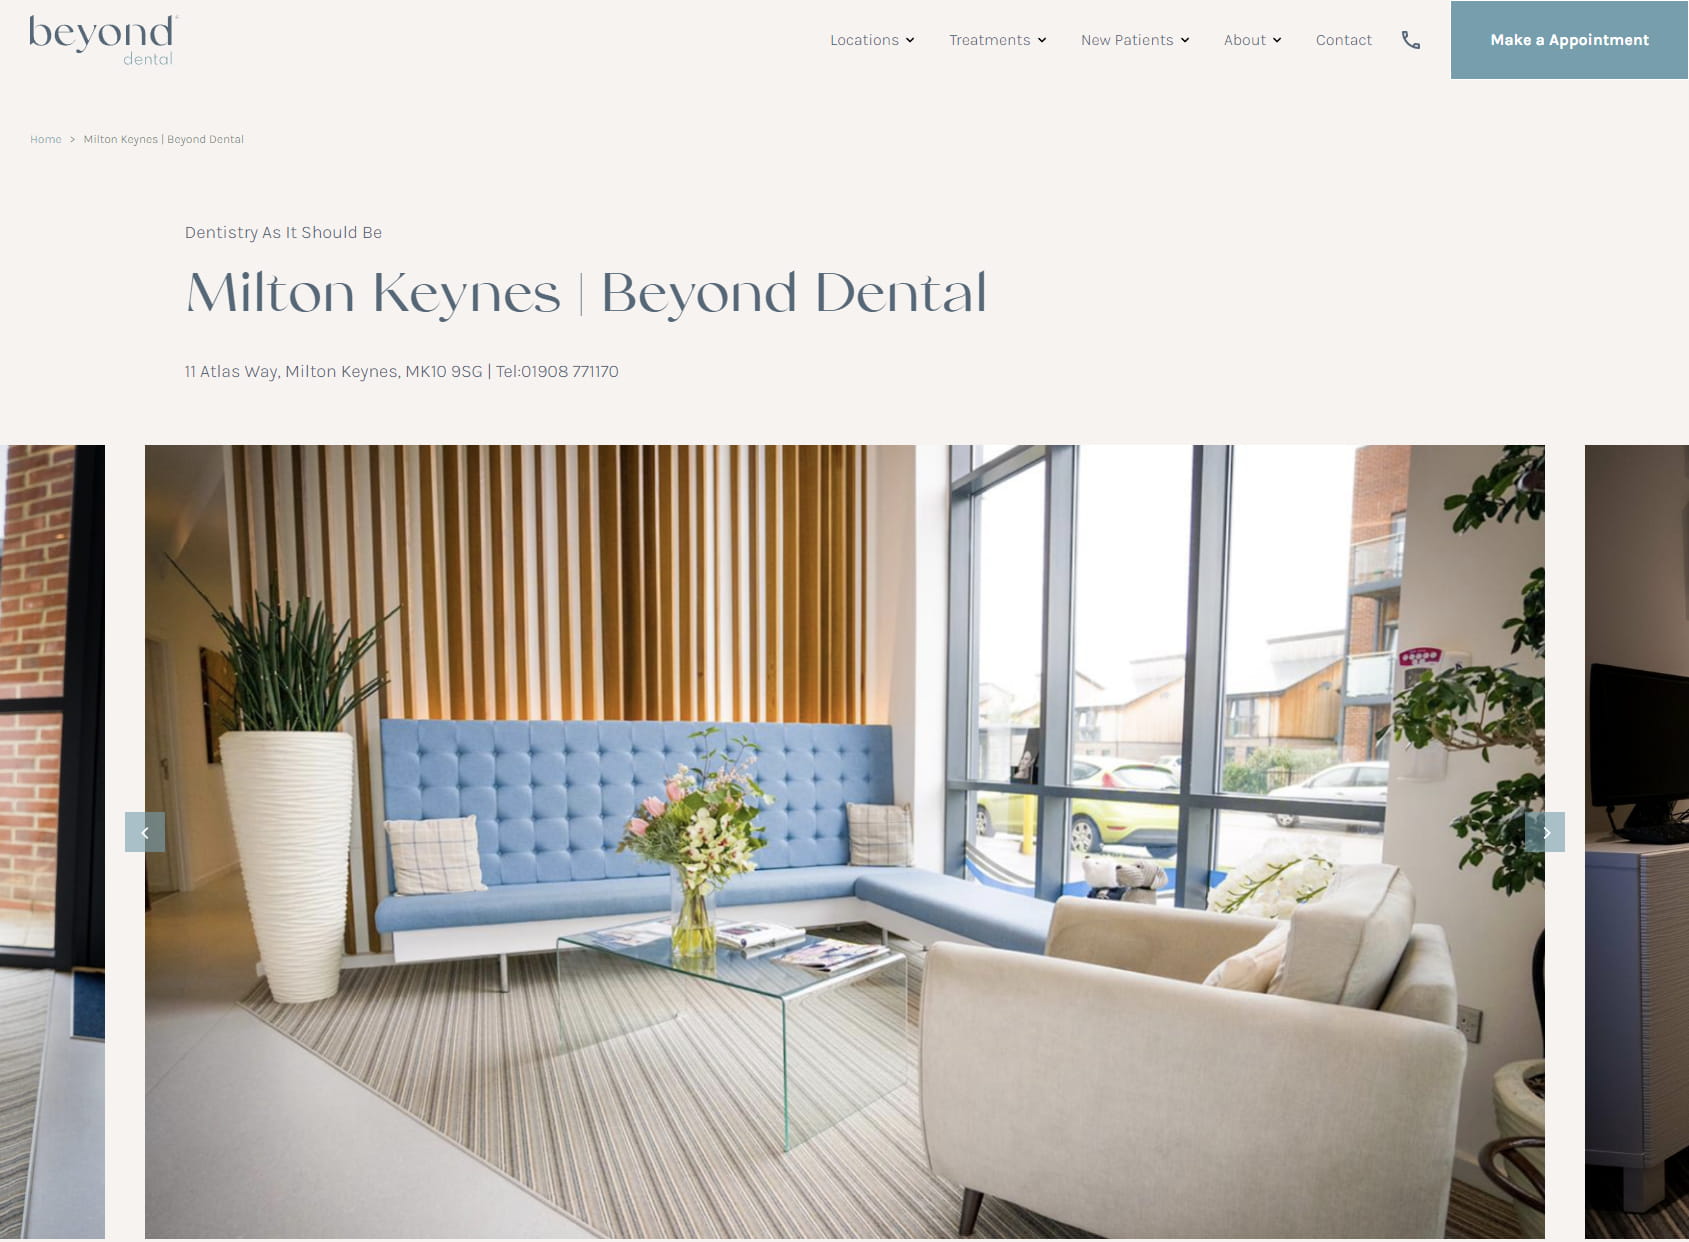 Beyond Dental Milton Keynes